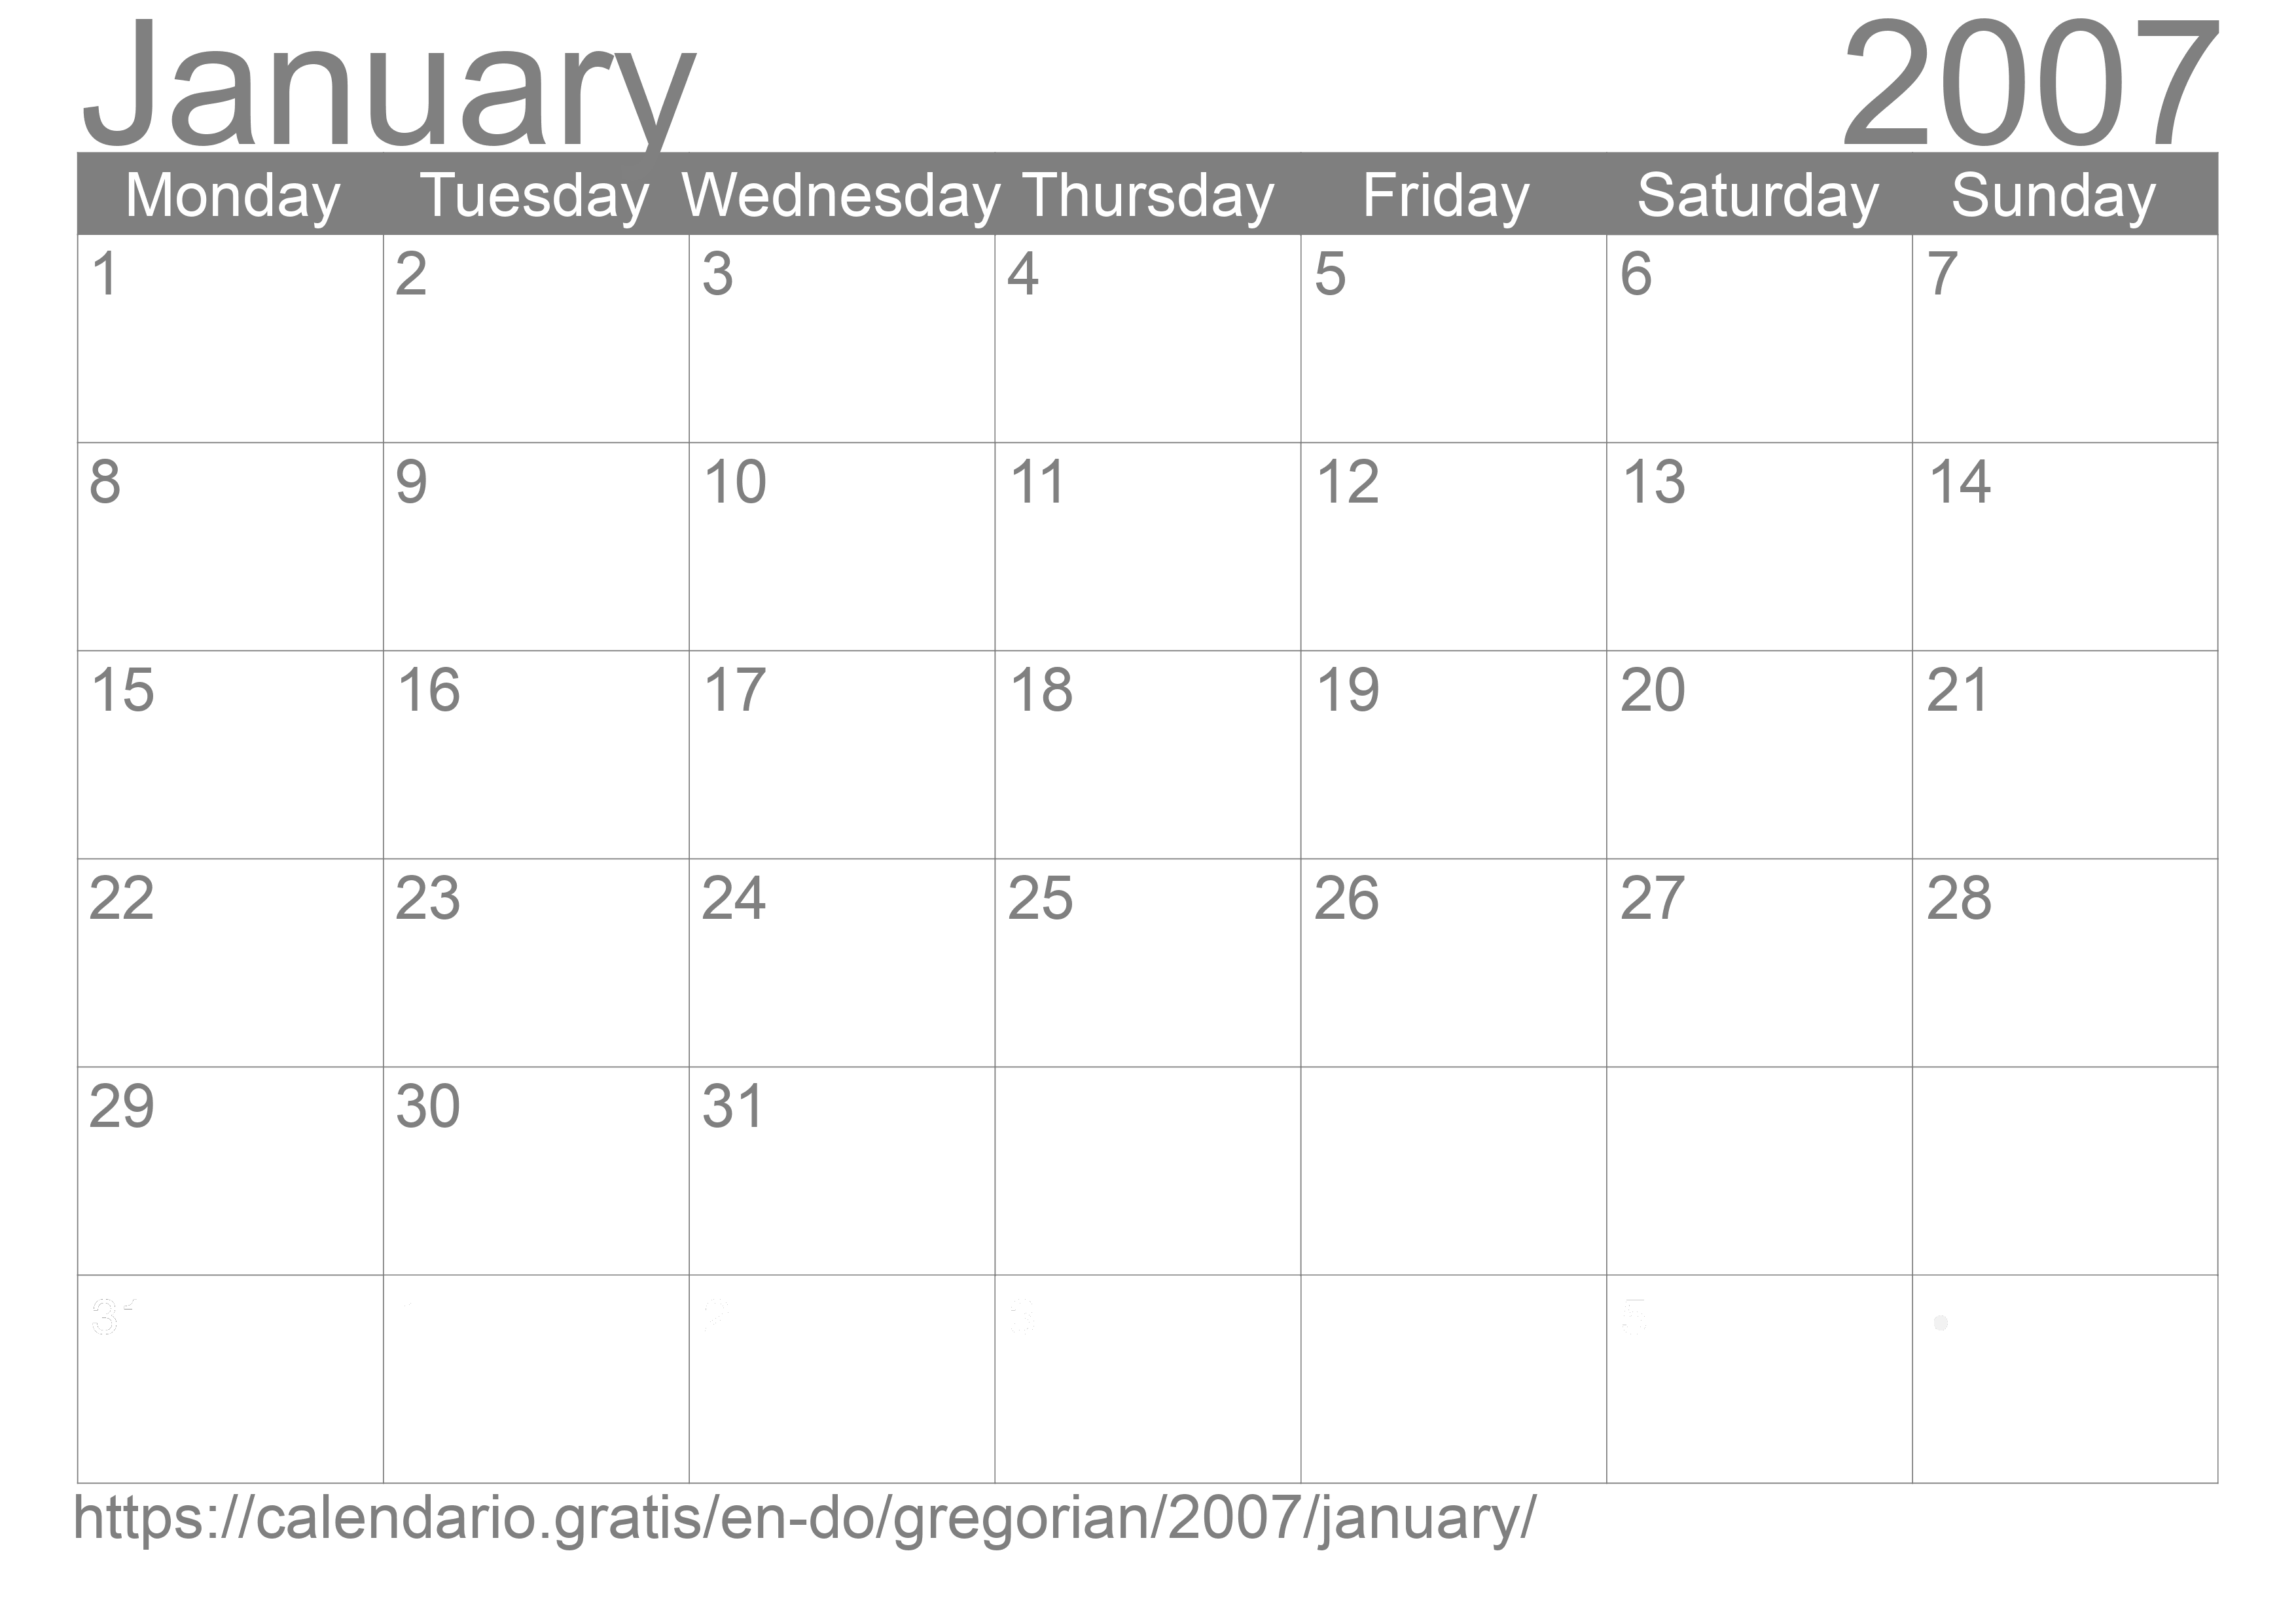 Calendar January 2007 to print